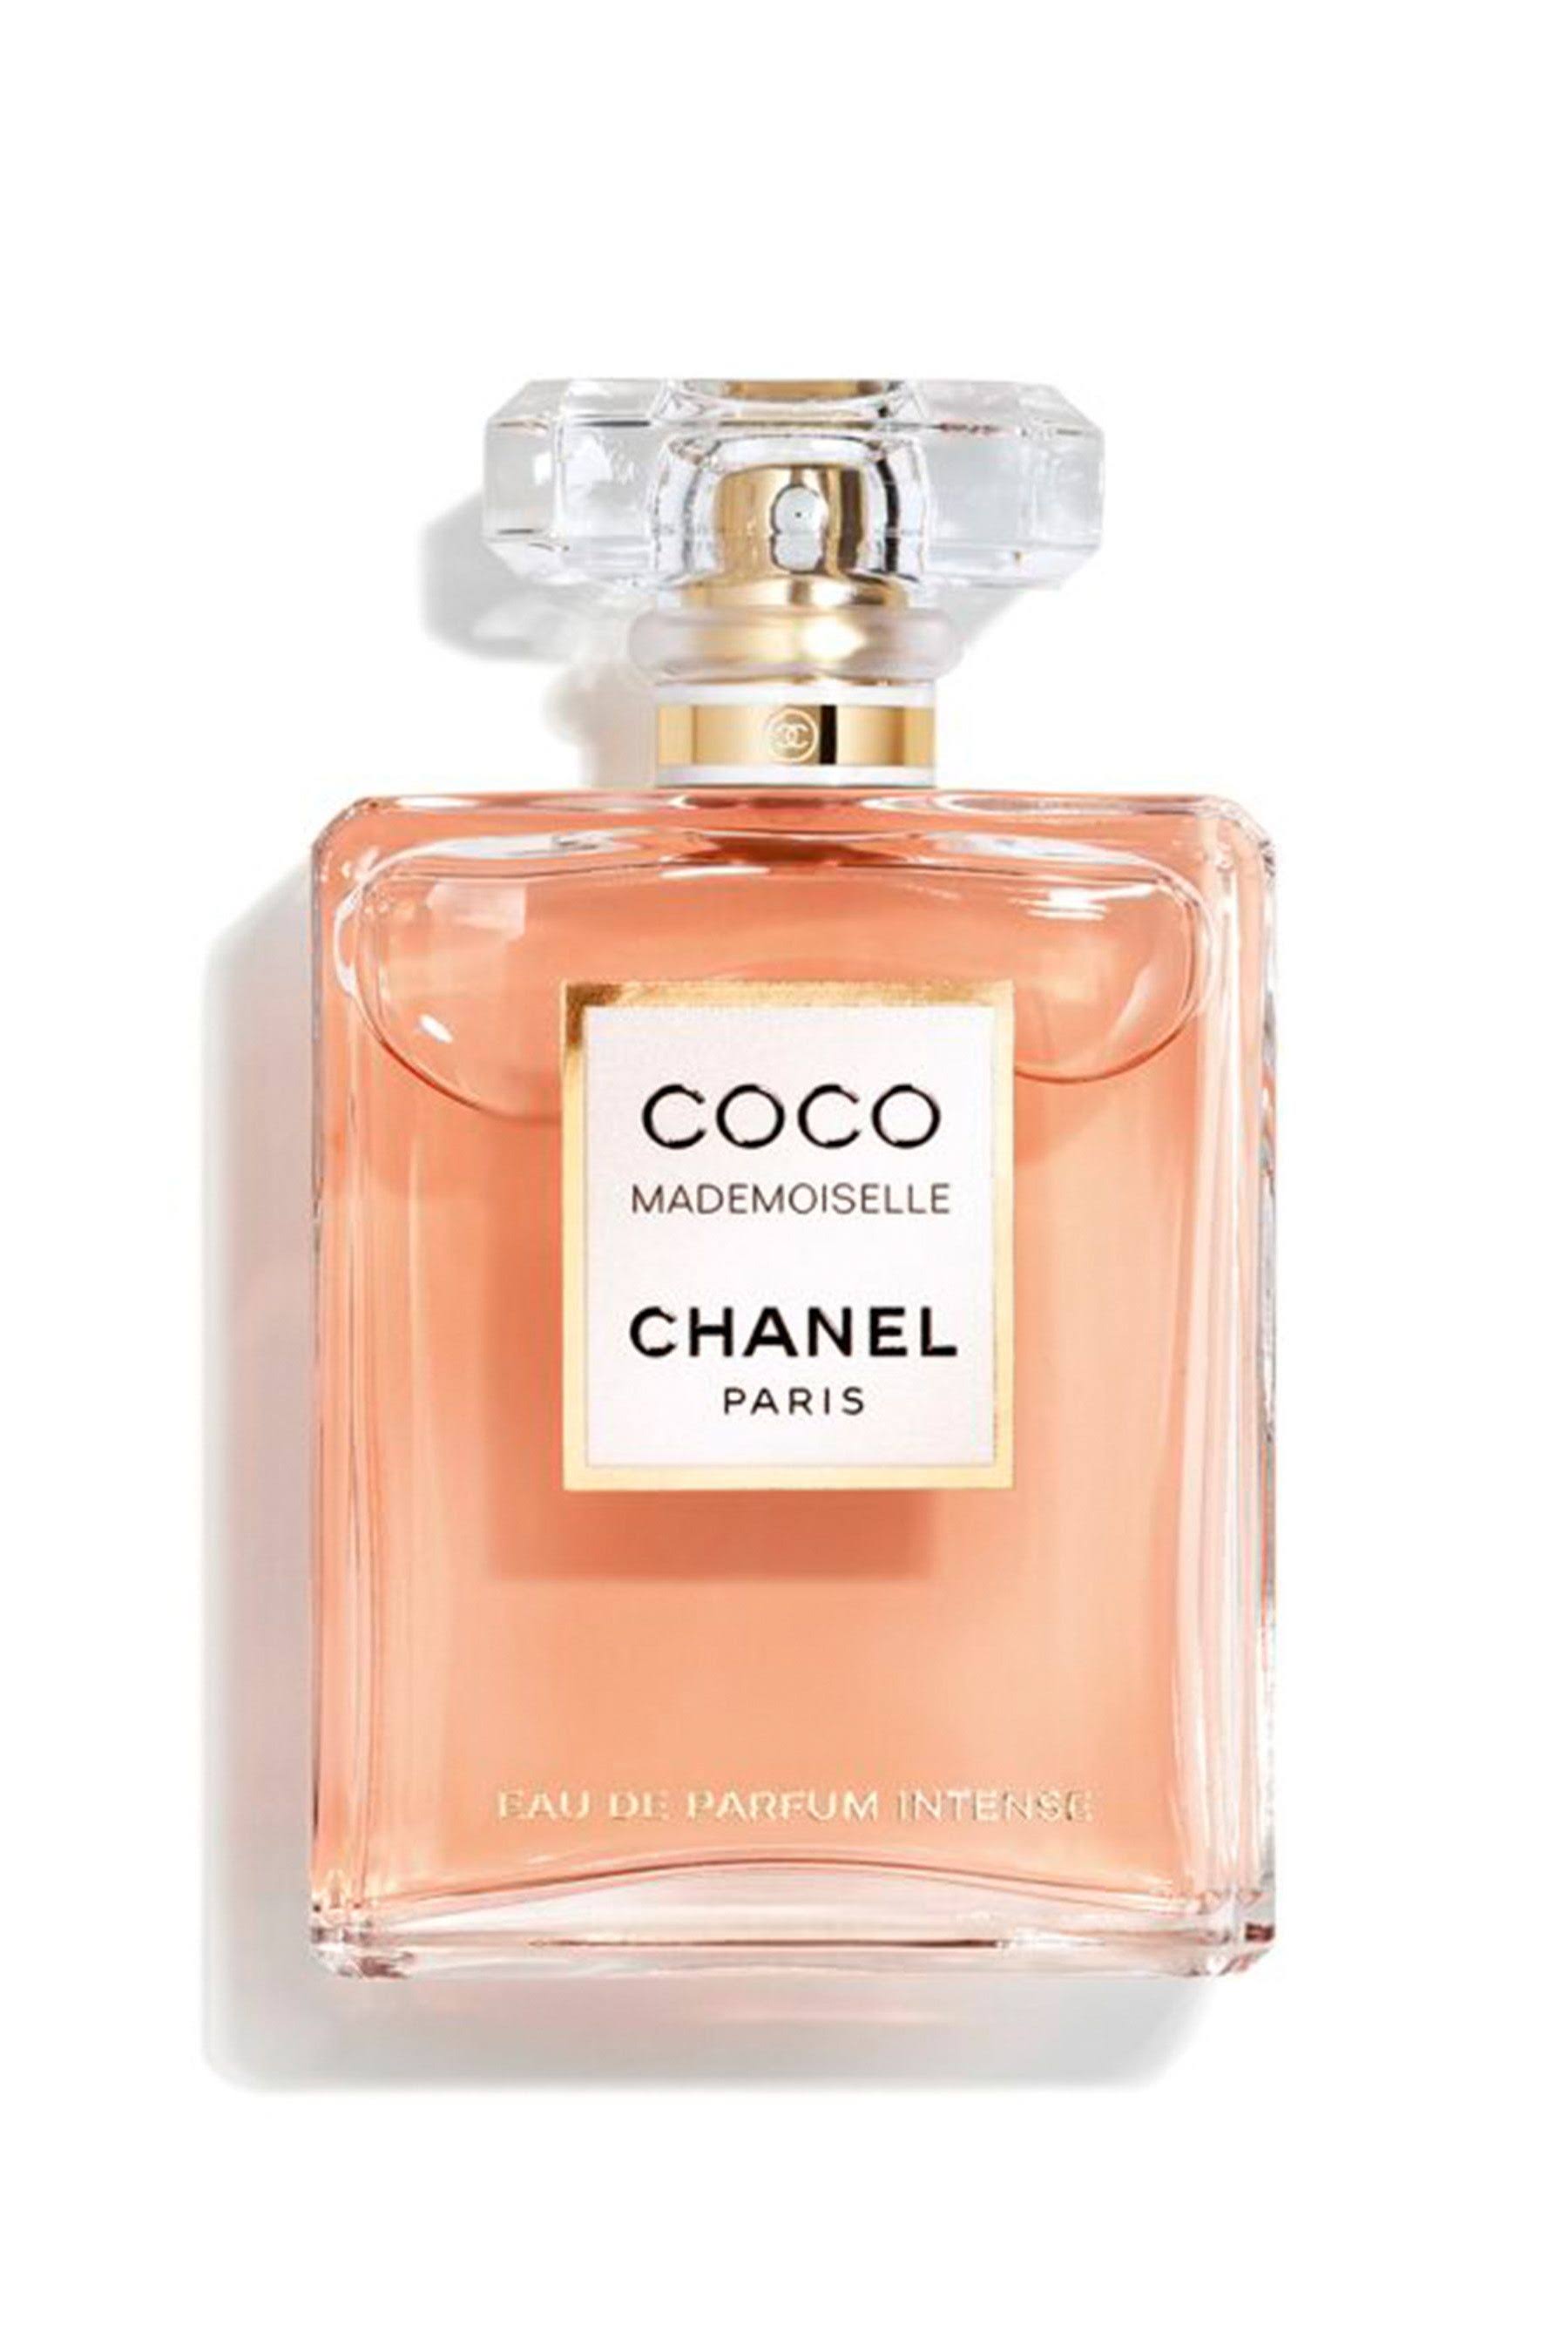 Chanel Coco Mademoiselle Eau de Parfum Intense Spray - 50ml